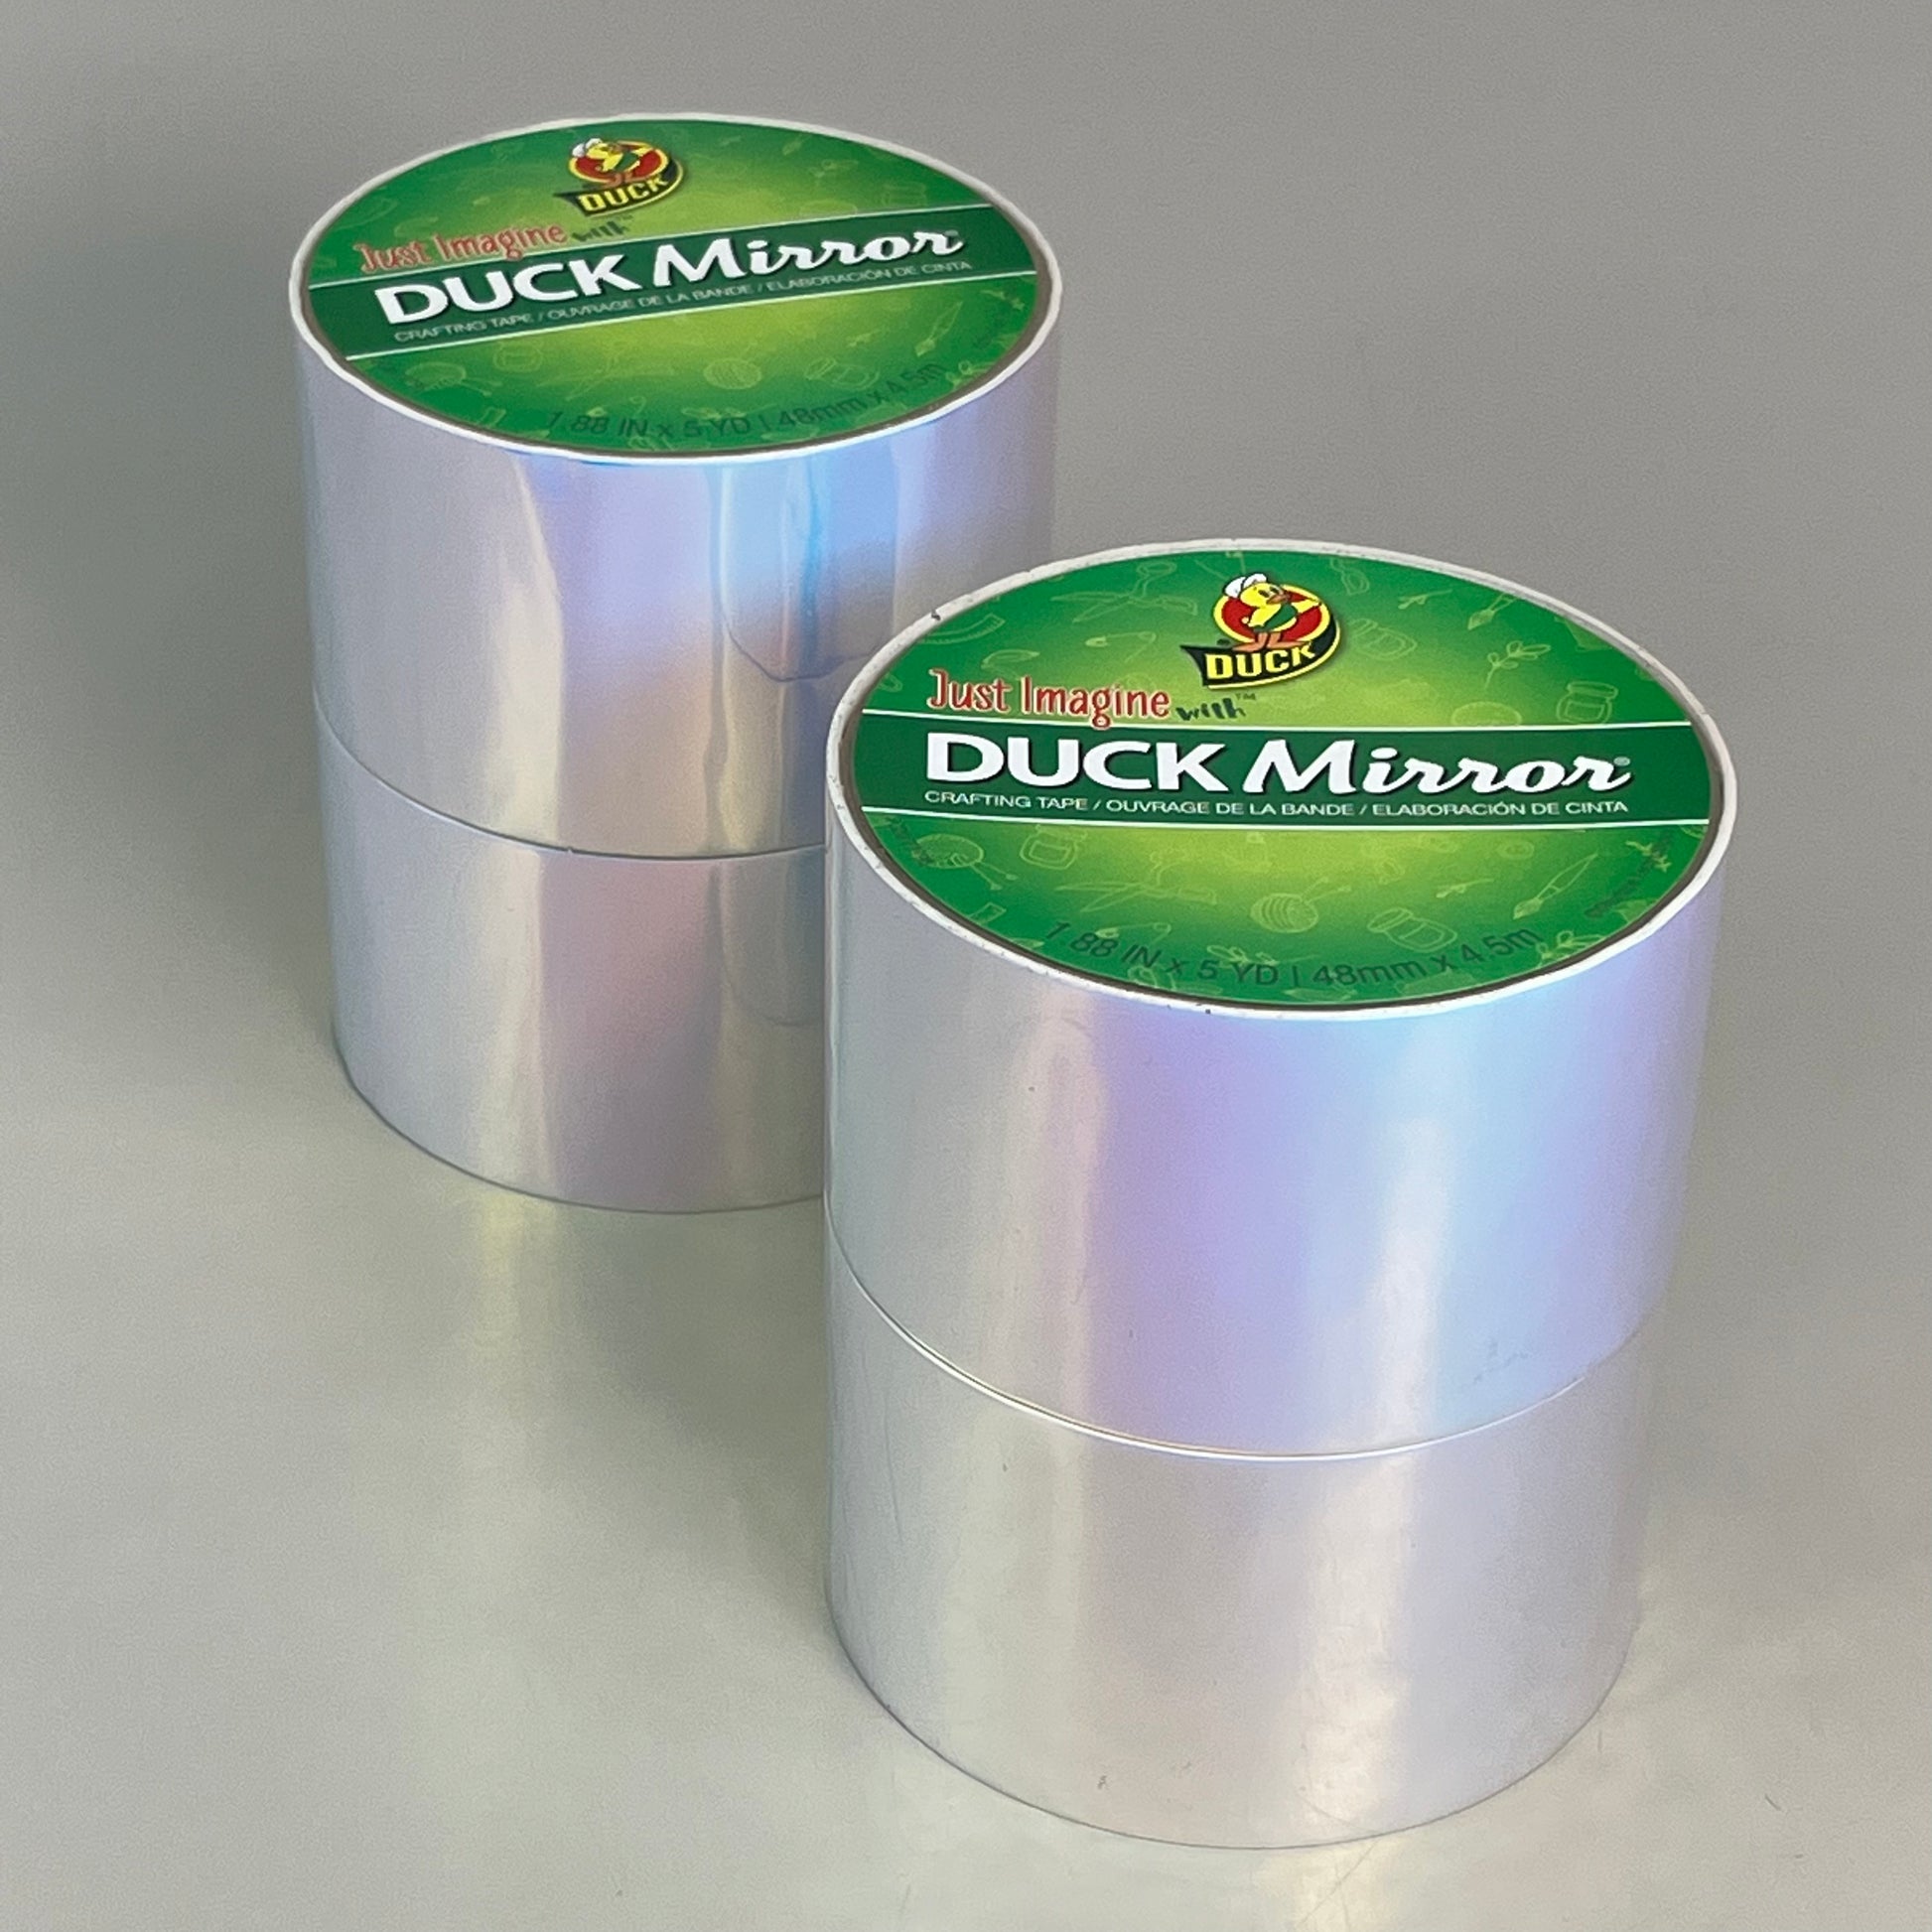 SHURTAPE Duck Craft 4 Rolls of White Mirror Crafting Tape 1.88 X